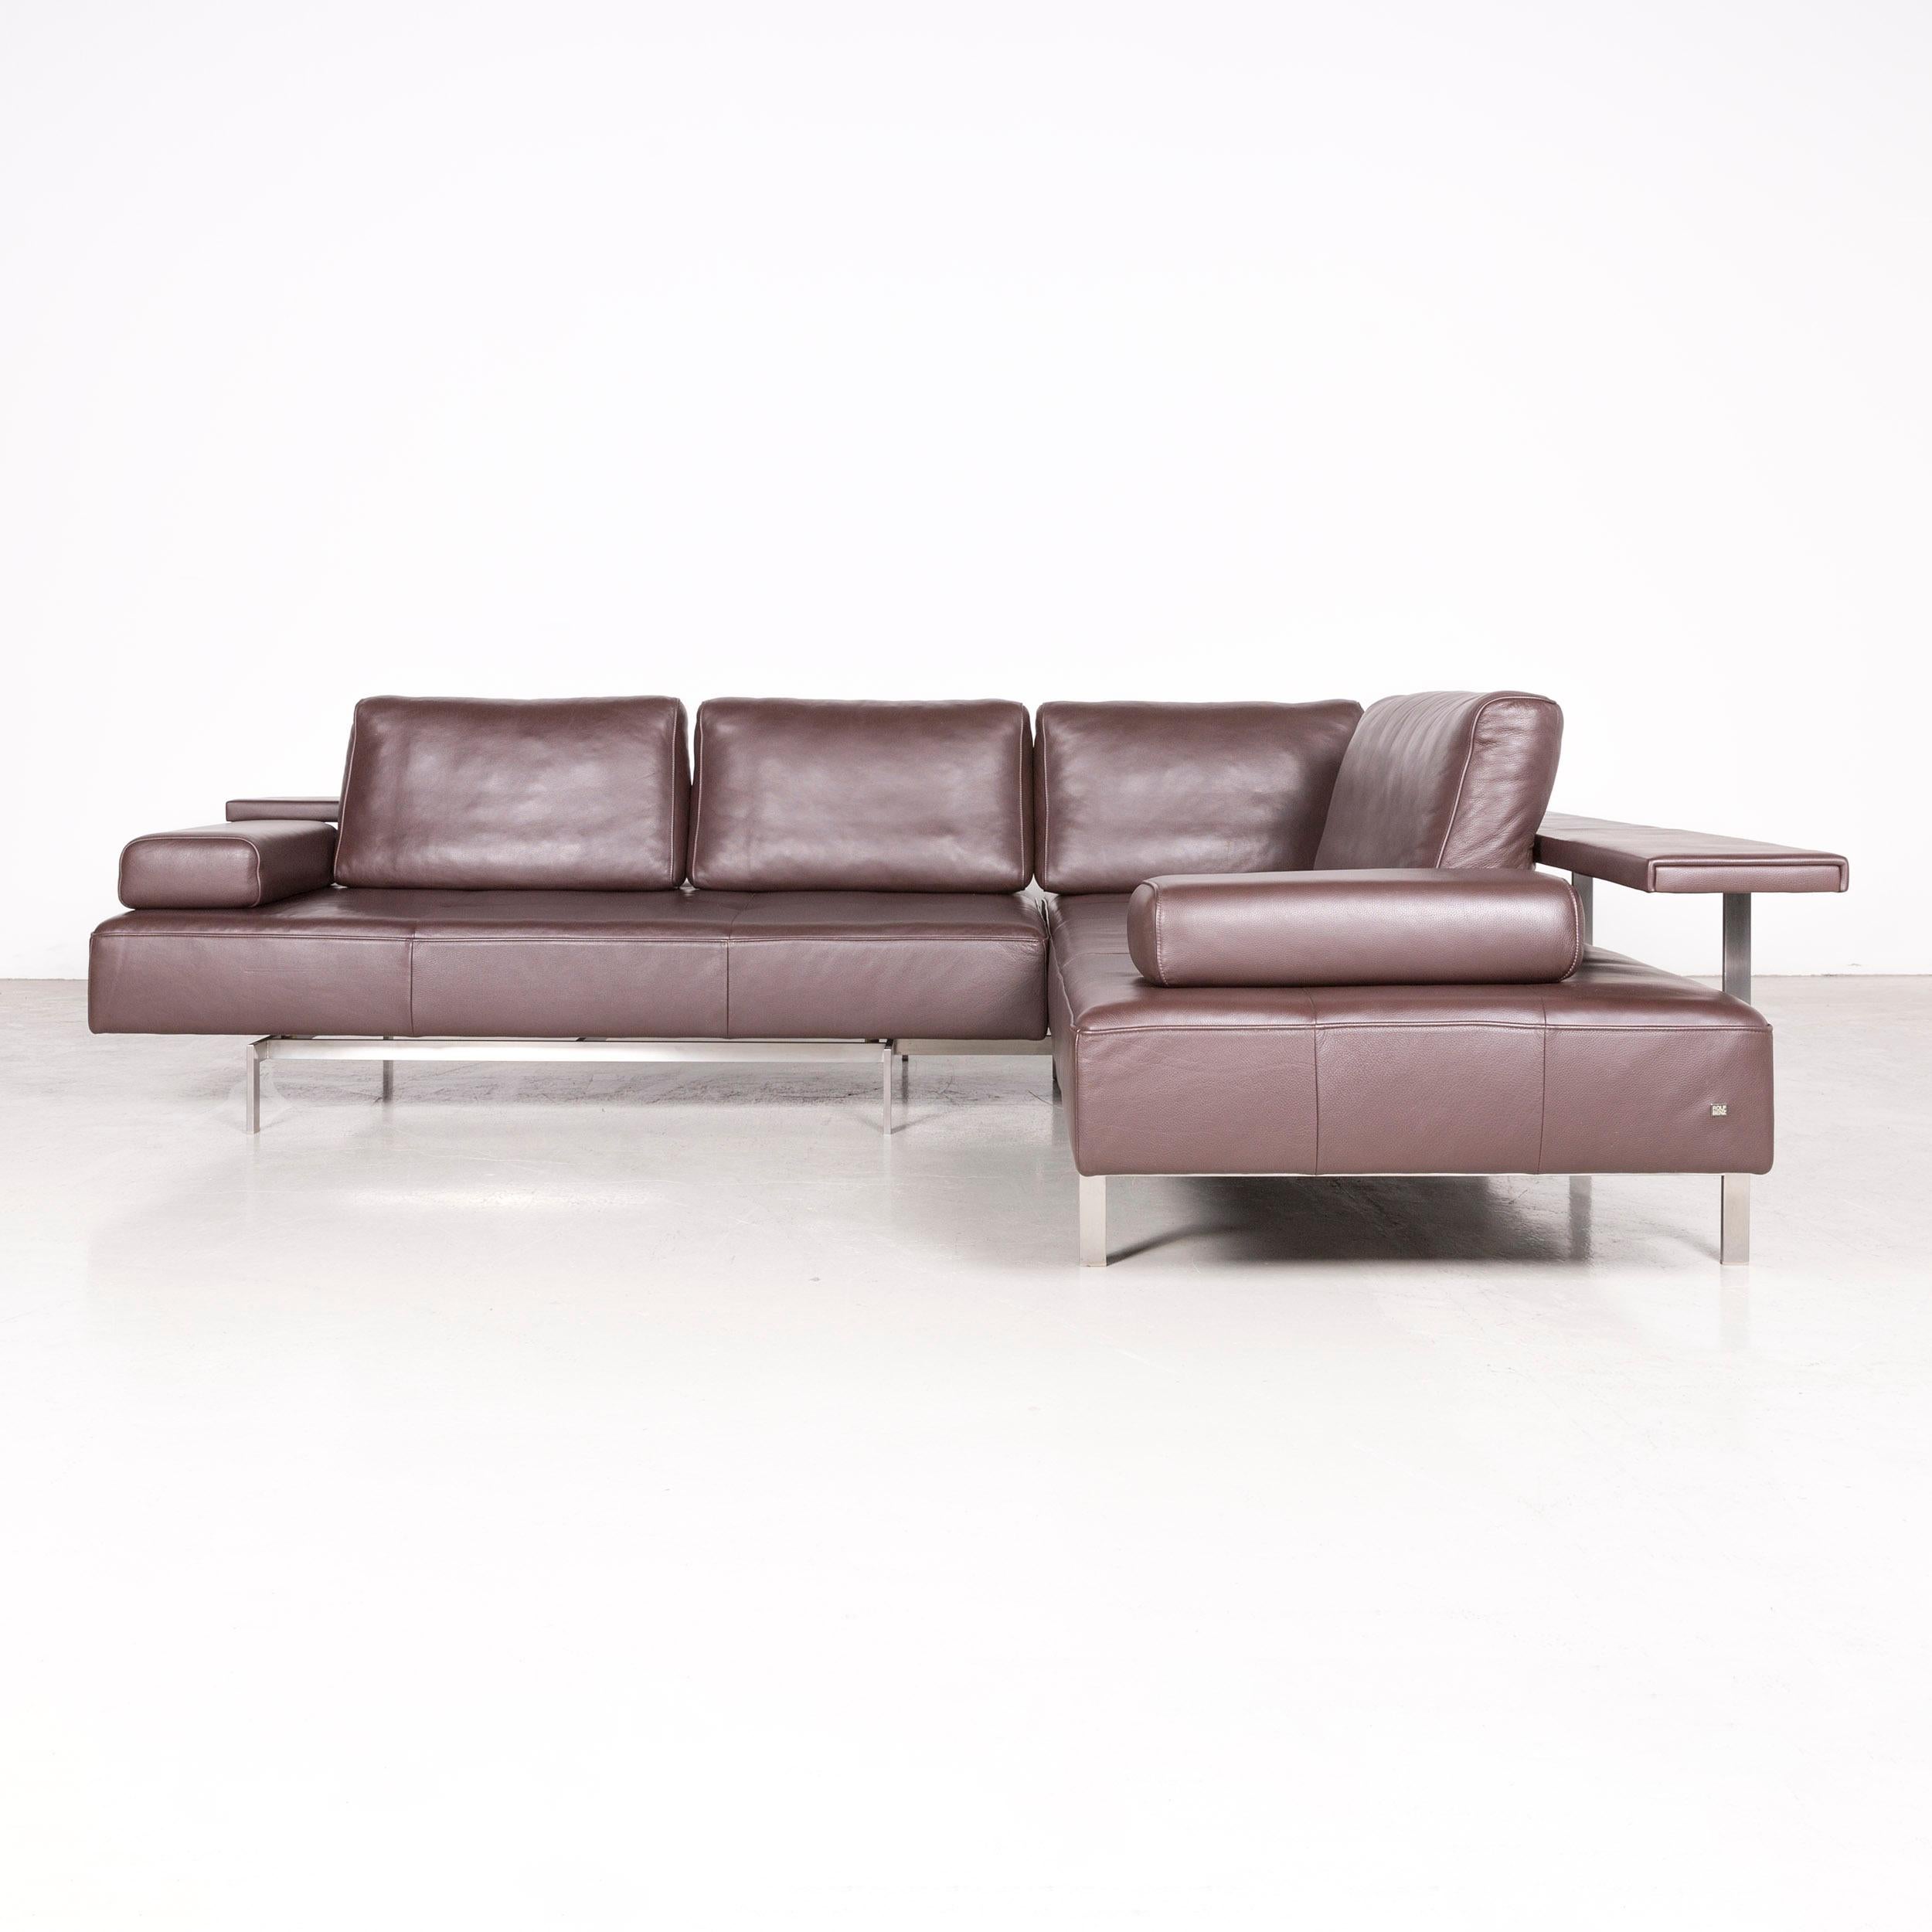 Rolf Benz Dono Designer Leather Corner Sofa Brown Genuine Leather Sofa Couch 4